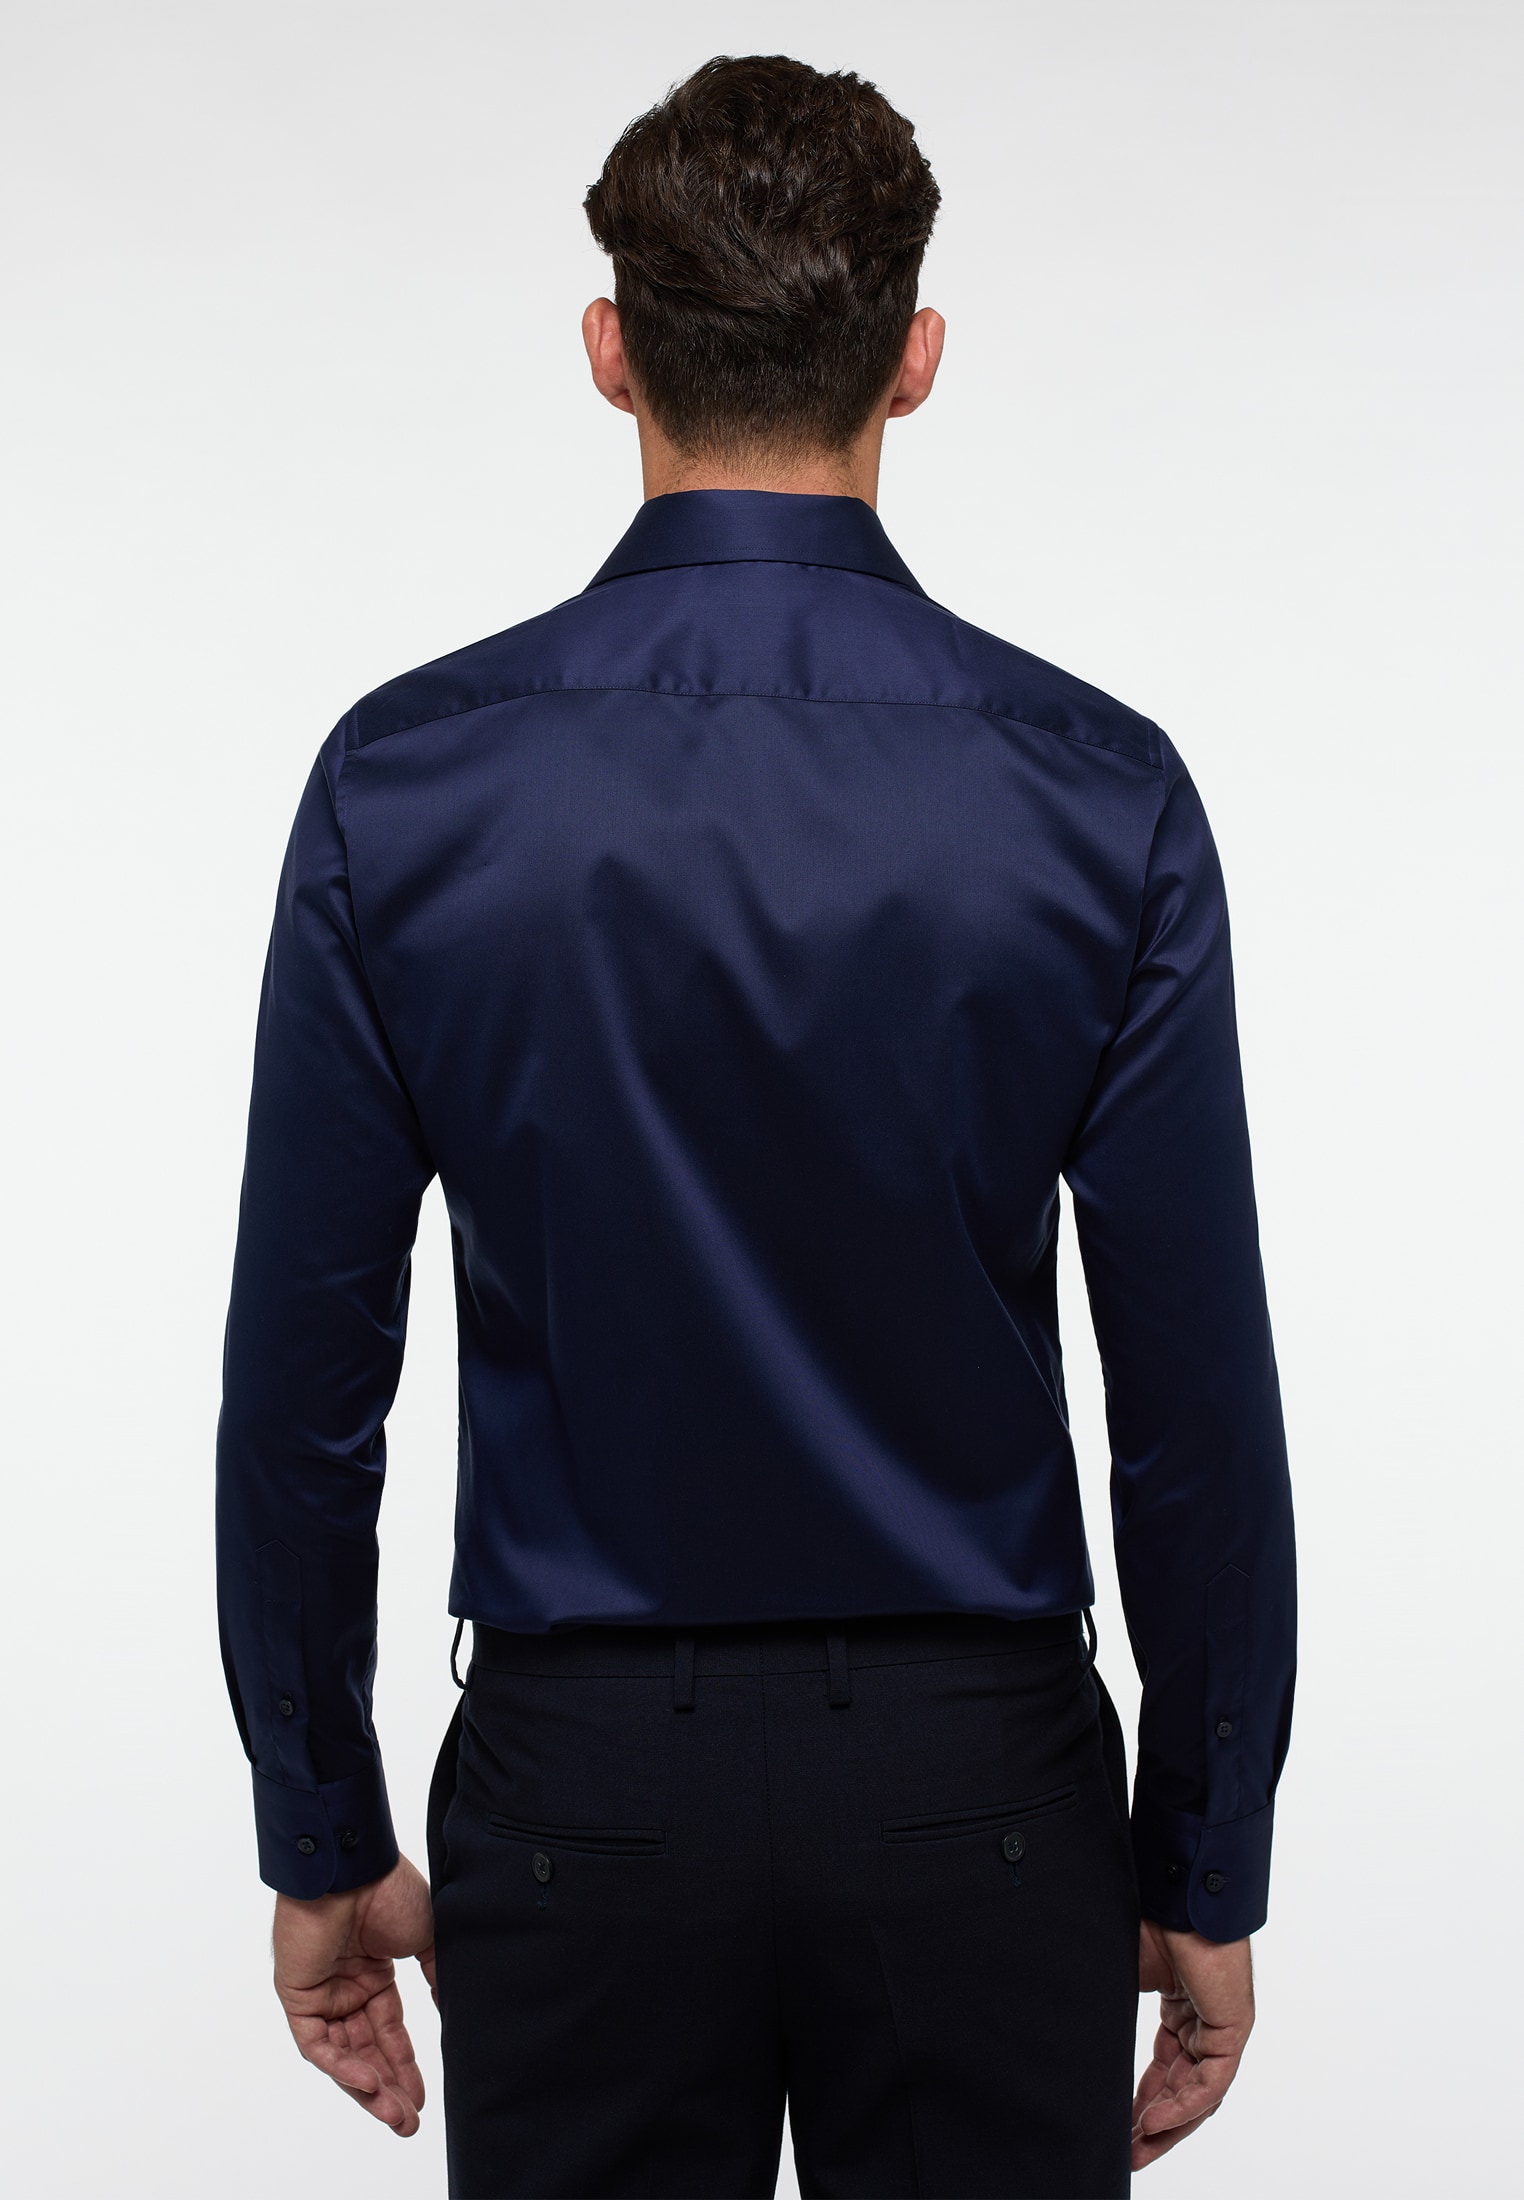 unifarben Shirt 1SH04299-01-81-44-1/1 FIT | Langarm | | dunkelblau Luxury 44 in dunkelblau | SLIM